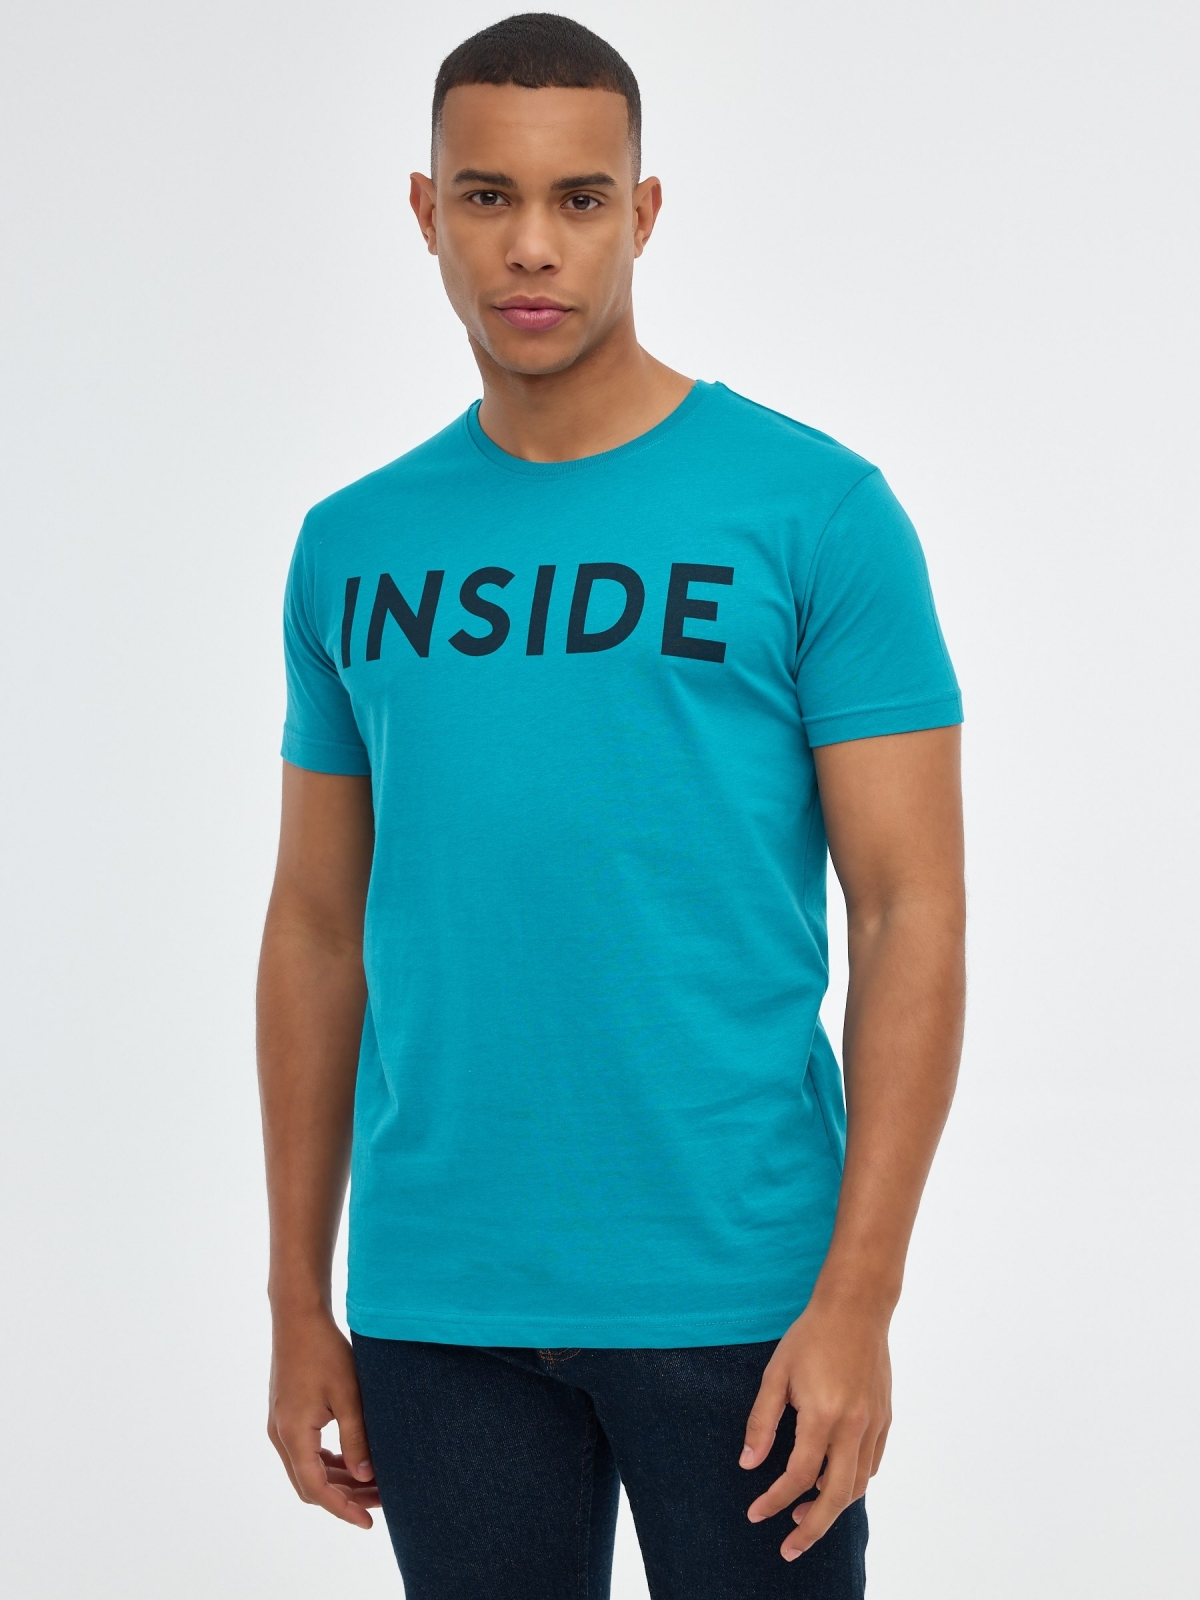 Camiseta básica "INSIDE" azul vista media frontal